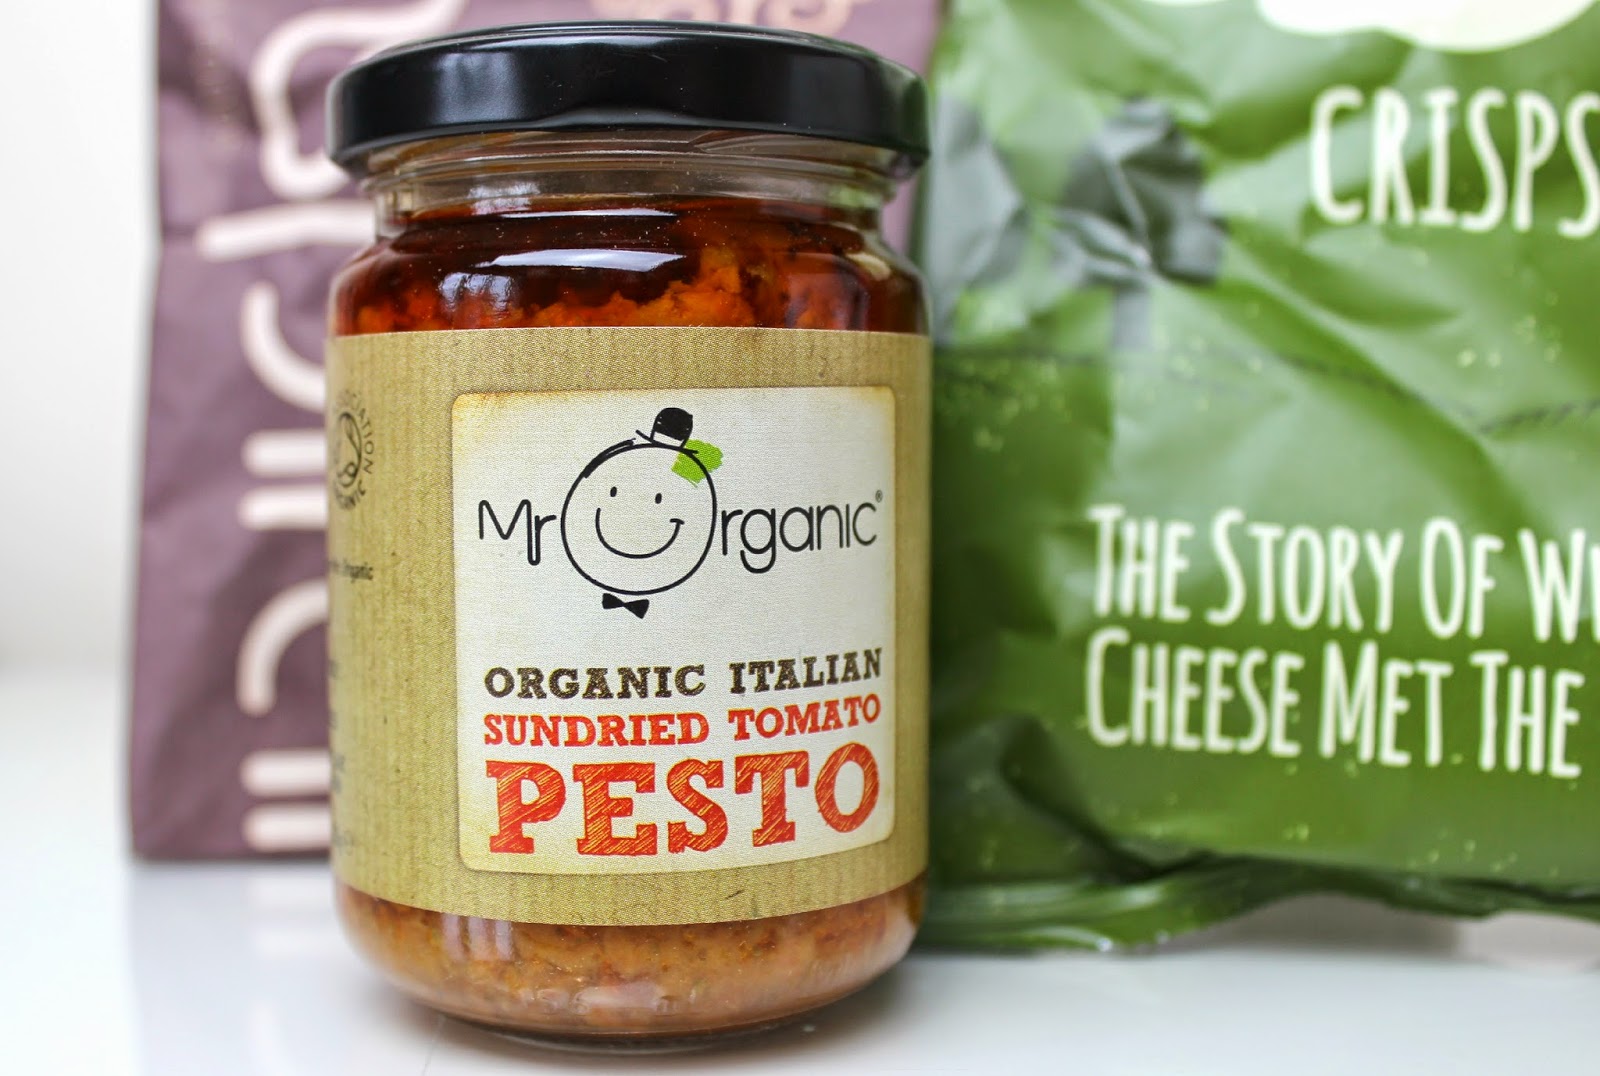 A picture of Mr Organic Organic Italian Sundried Tomato Pesto